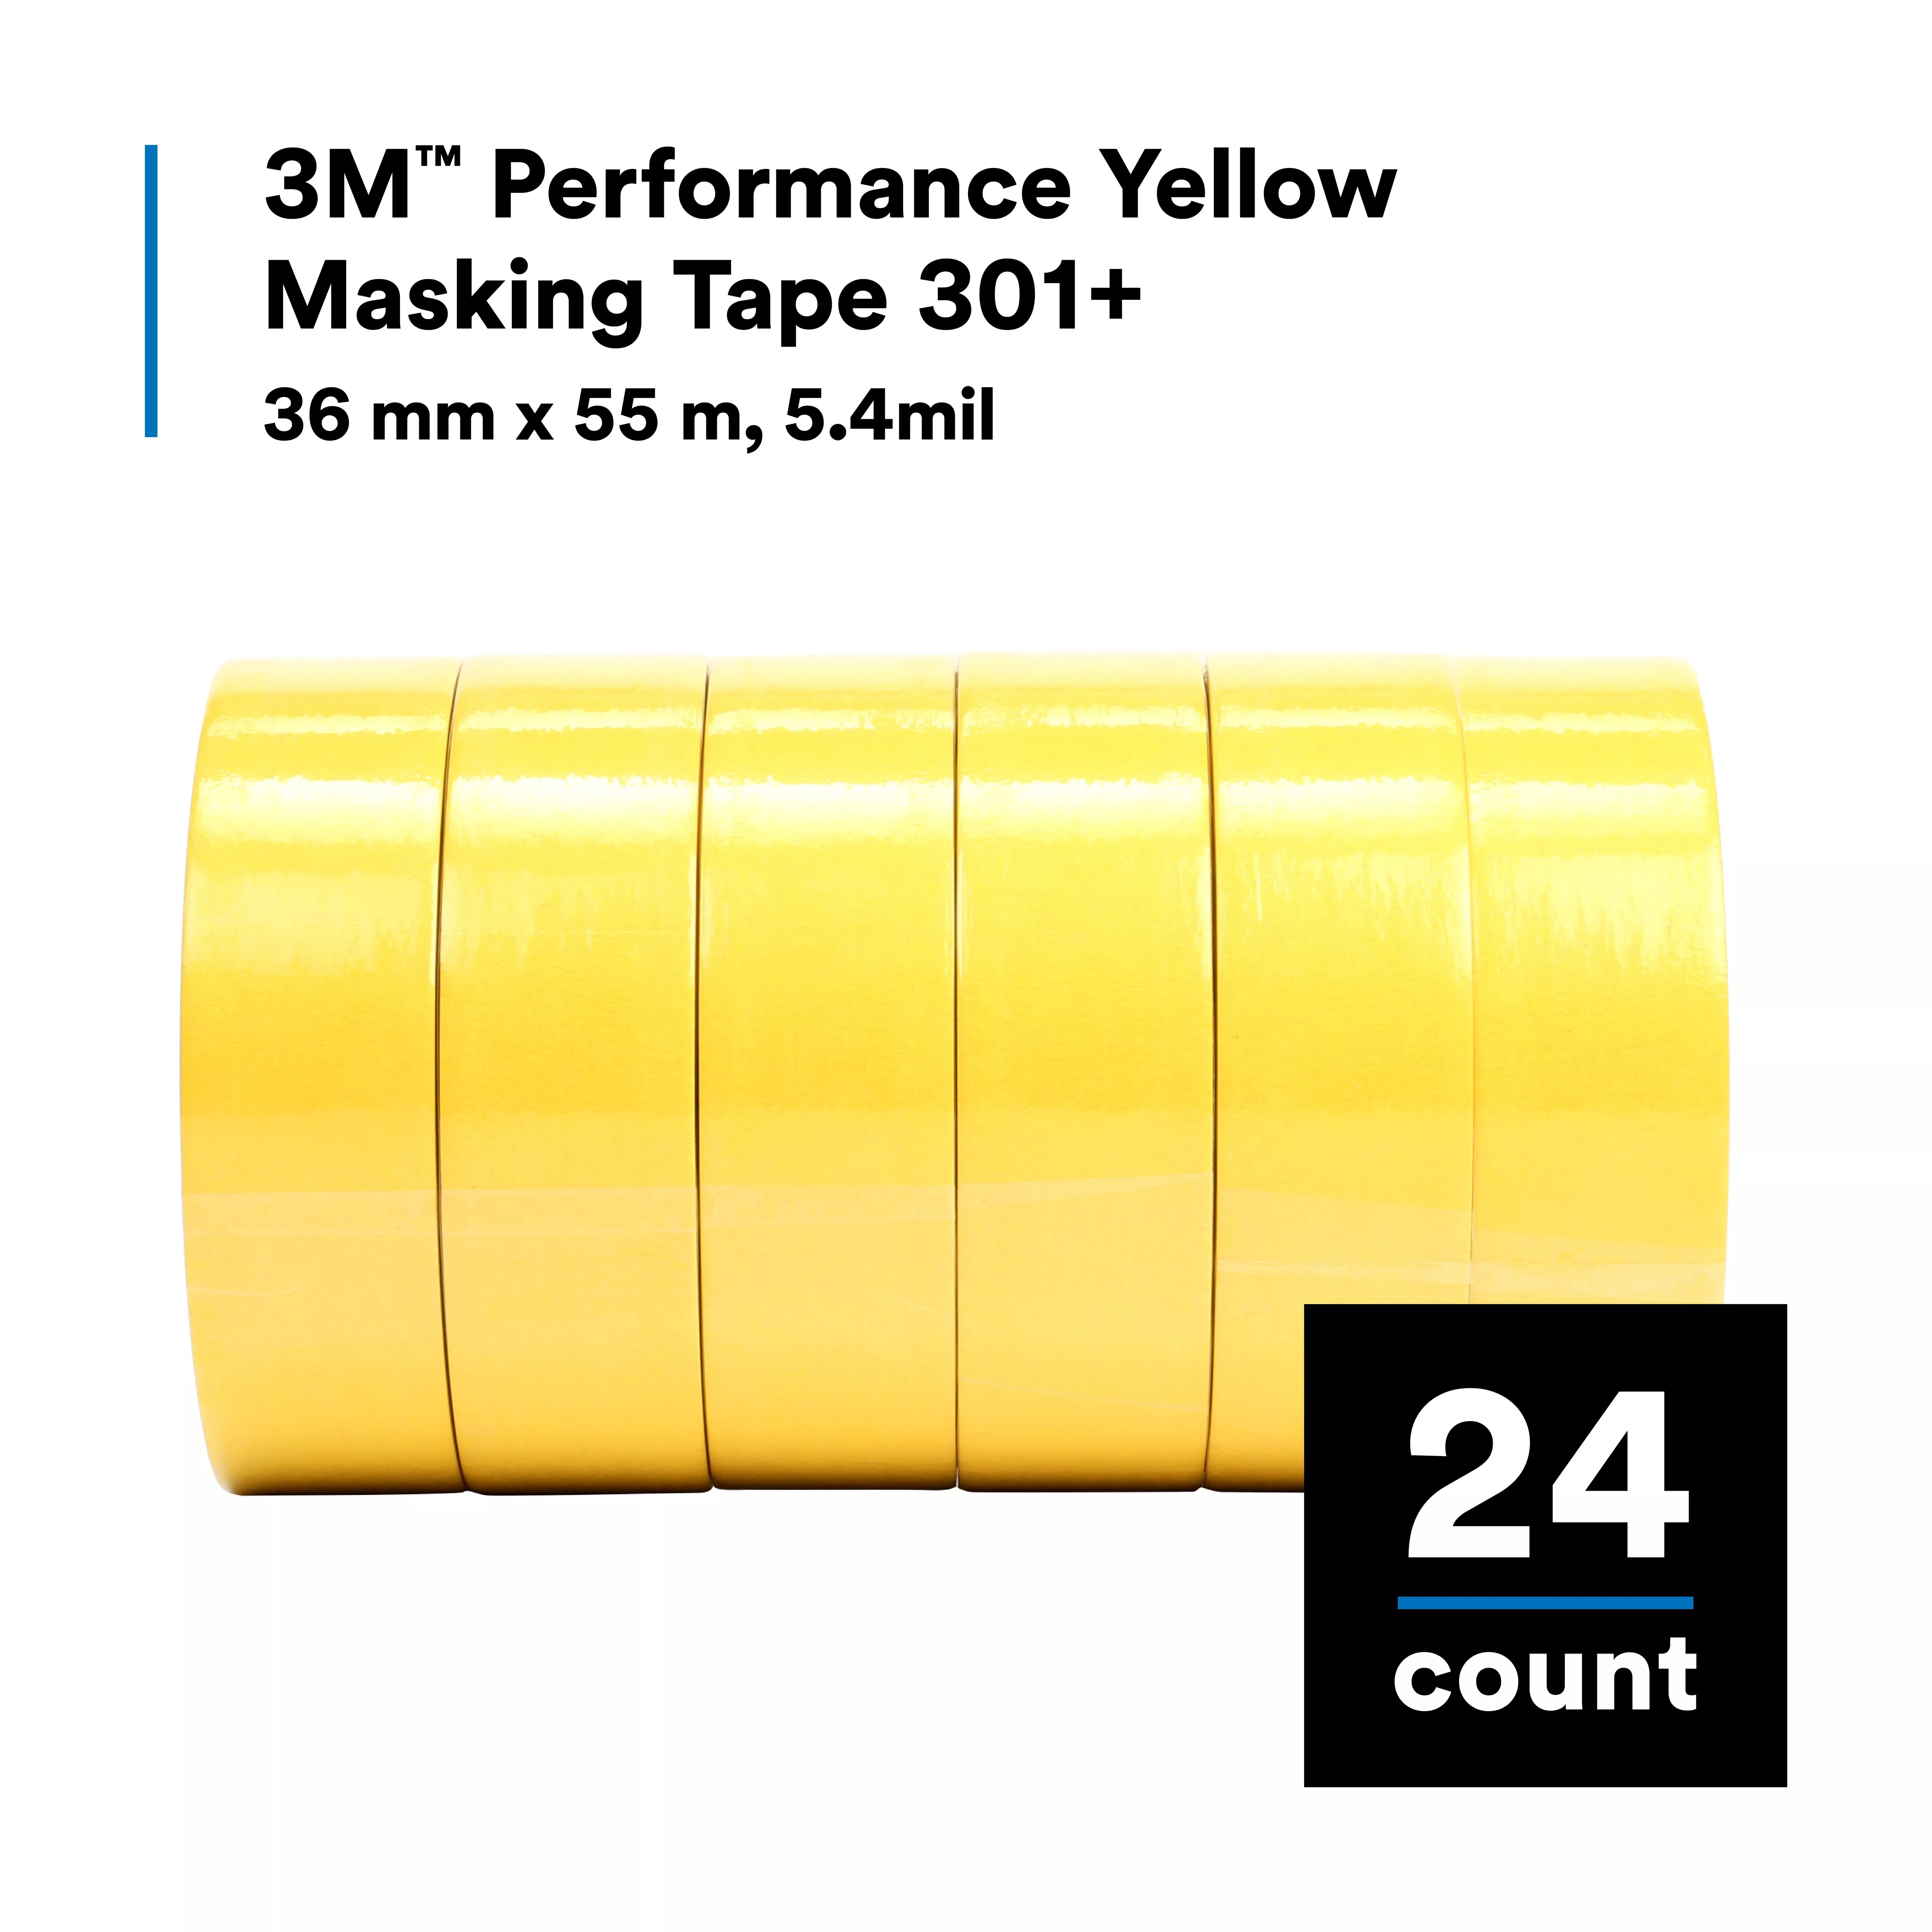 SKU 7000148421 | 3M™ Performance Yellow Masking Tape 301+